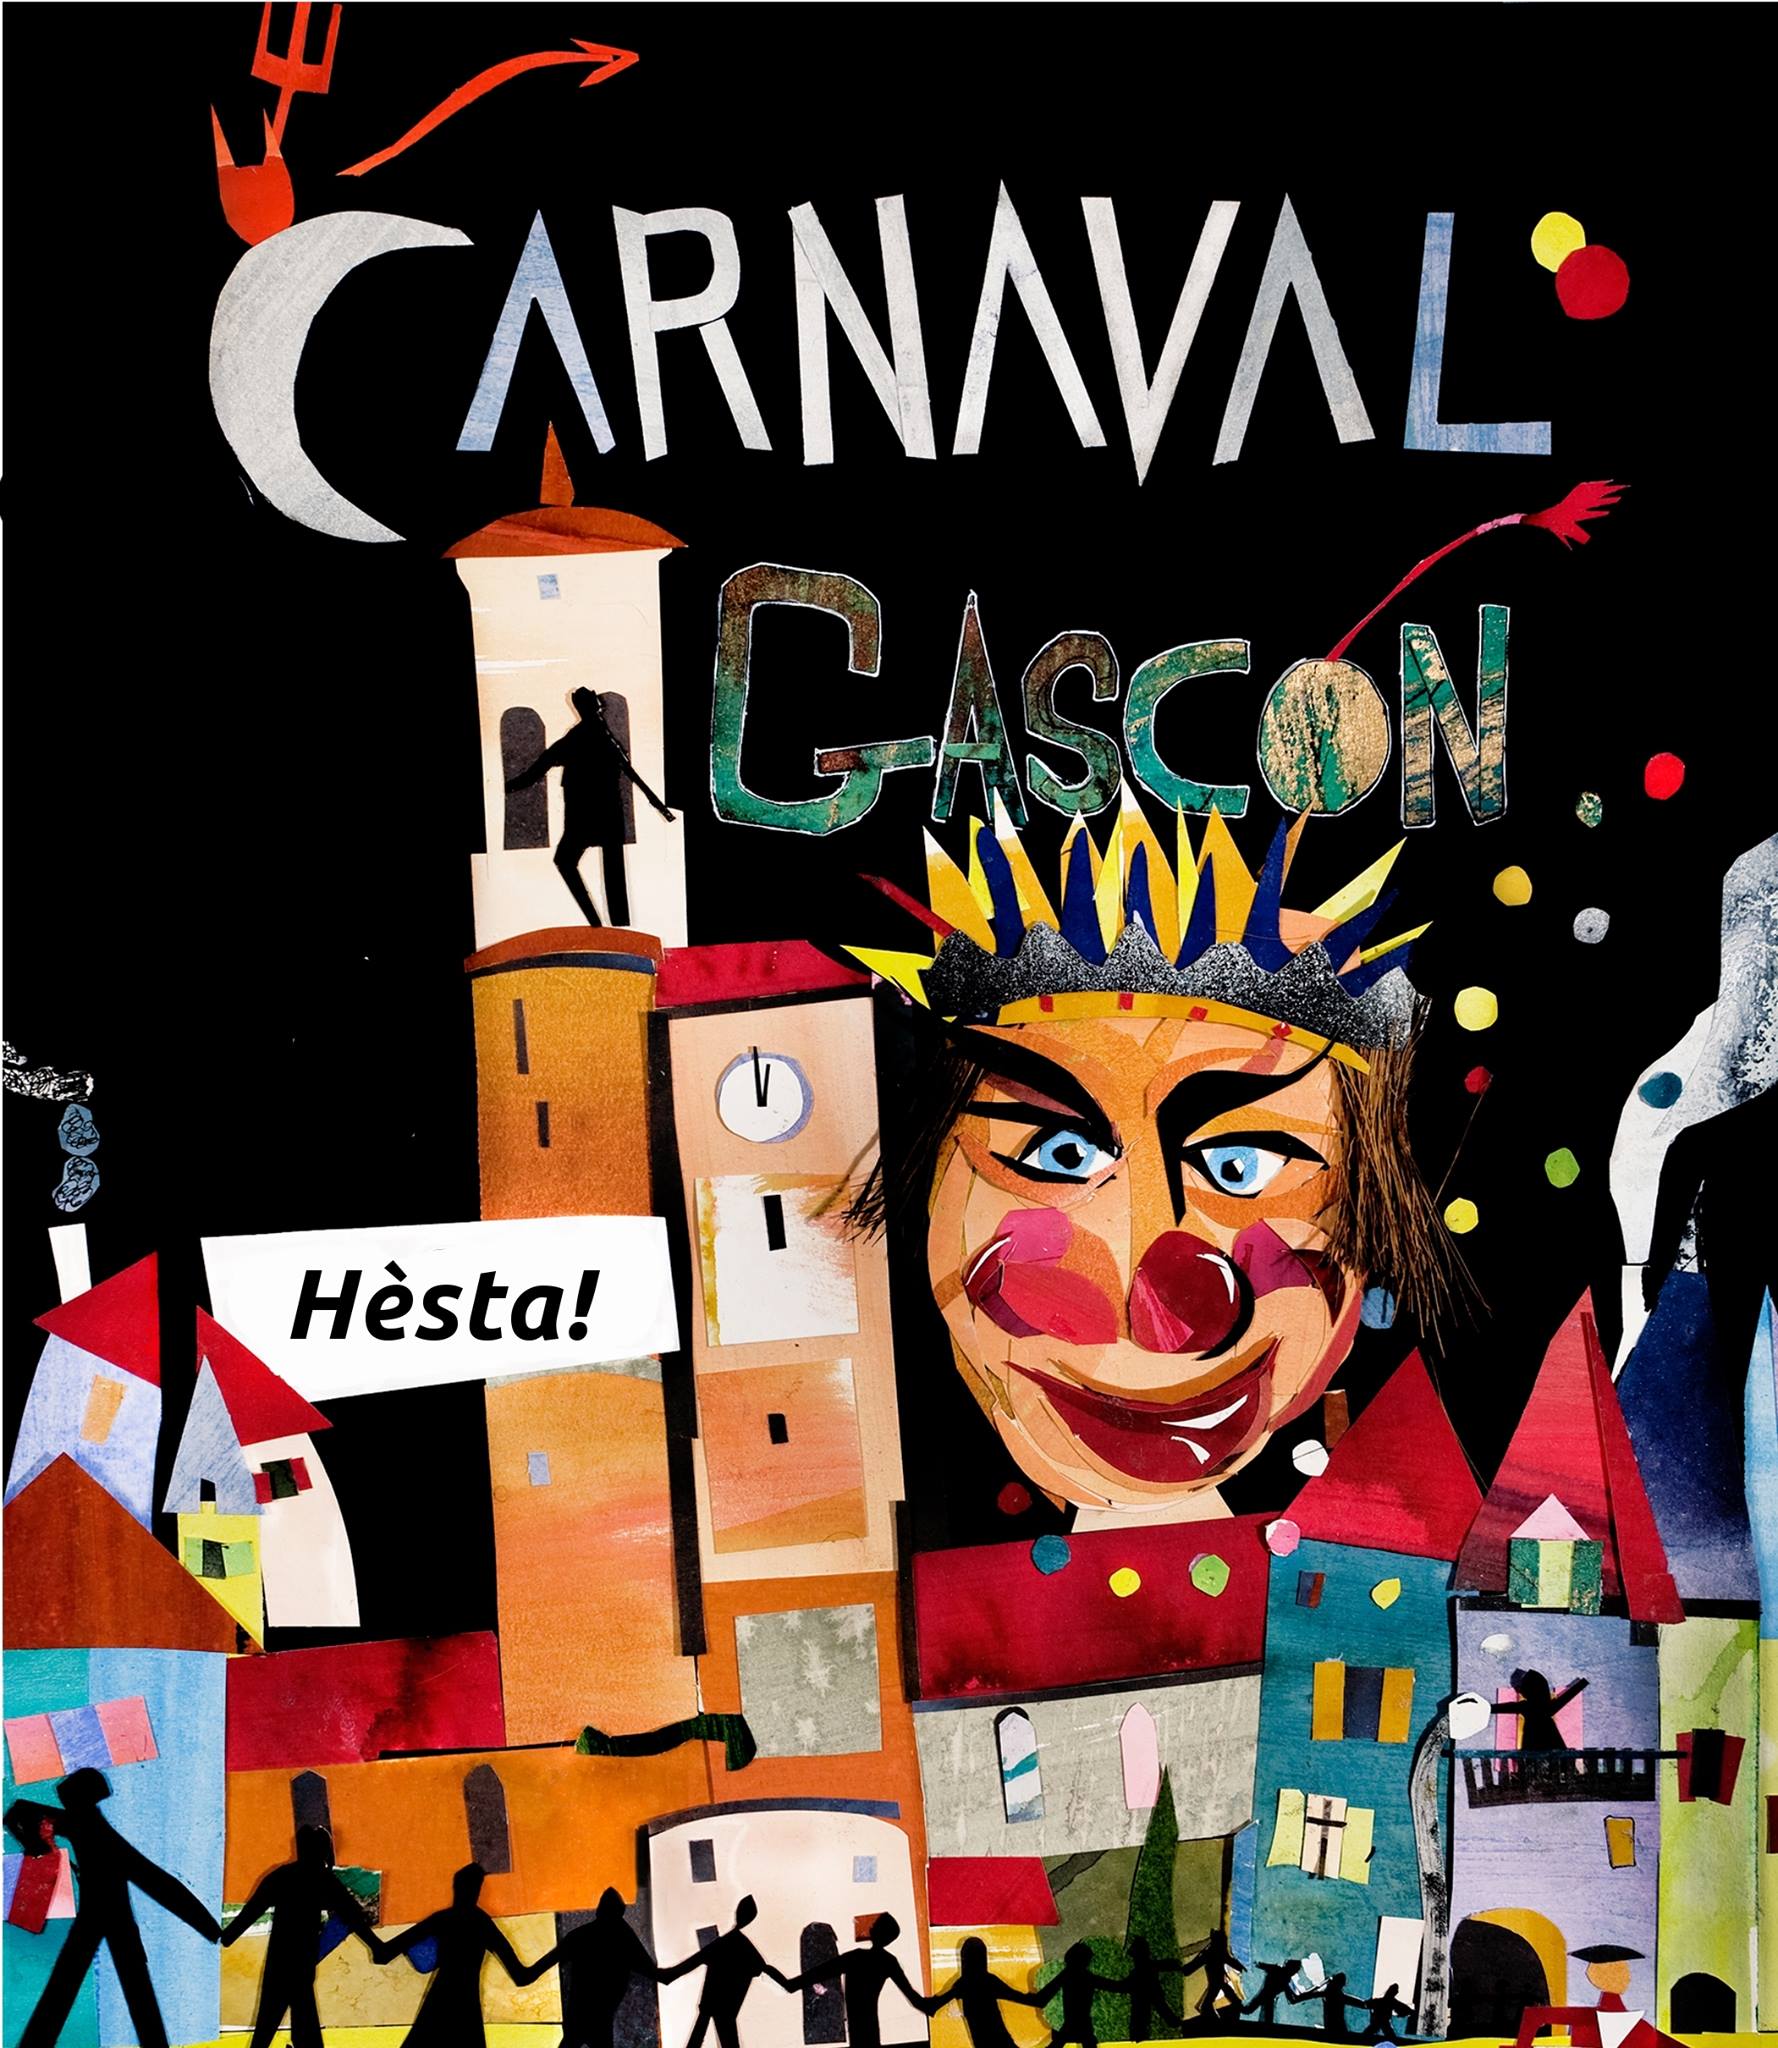 Carnaval Gascon